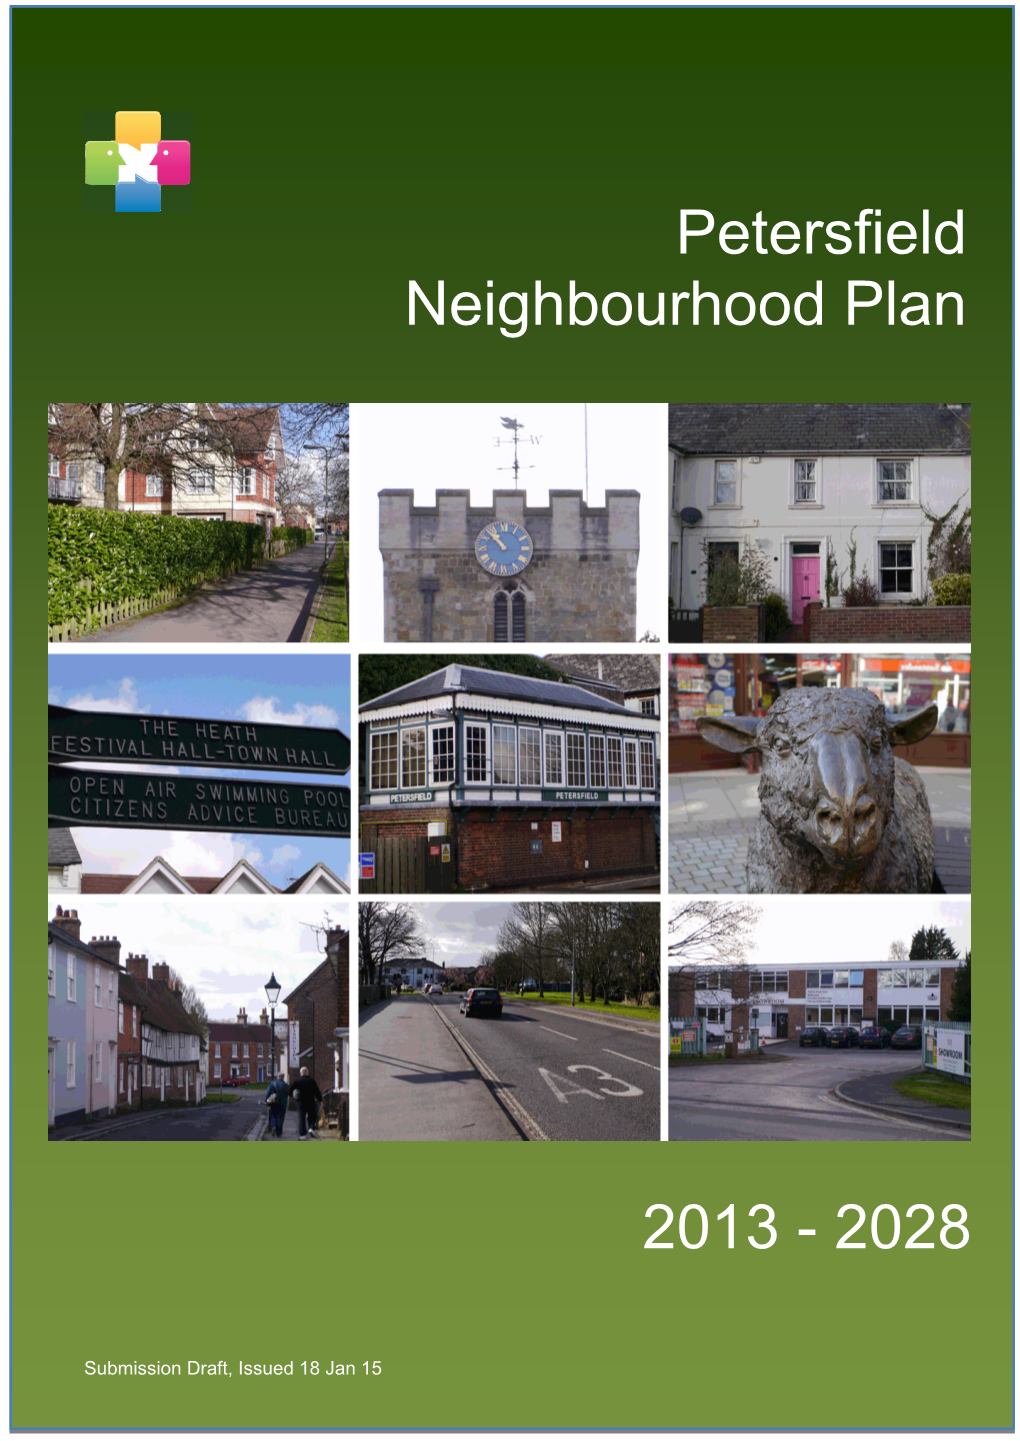 Petersfield Neighbourhood Plan 2013